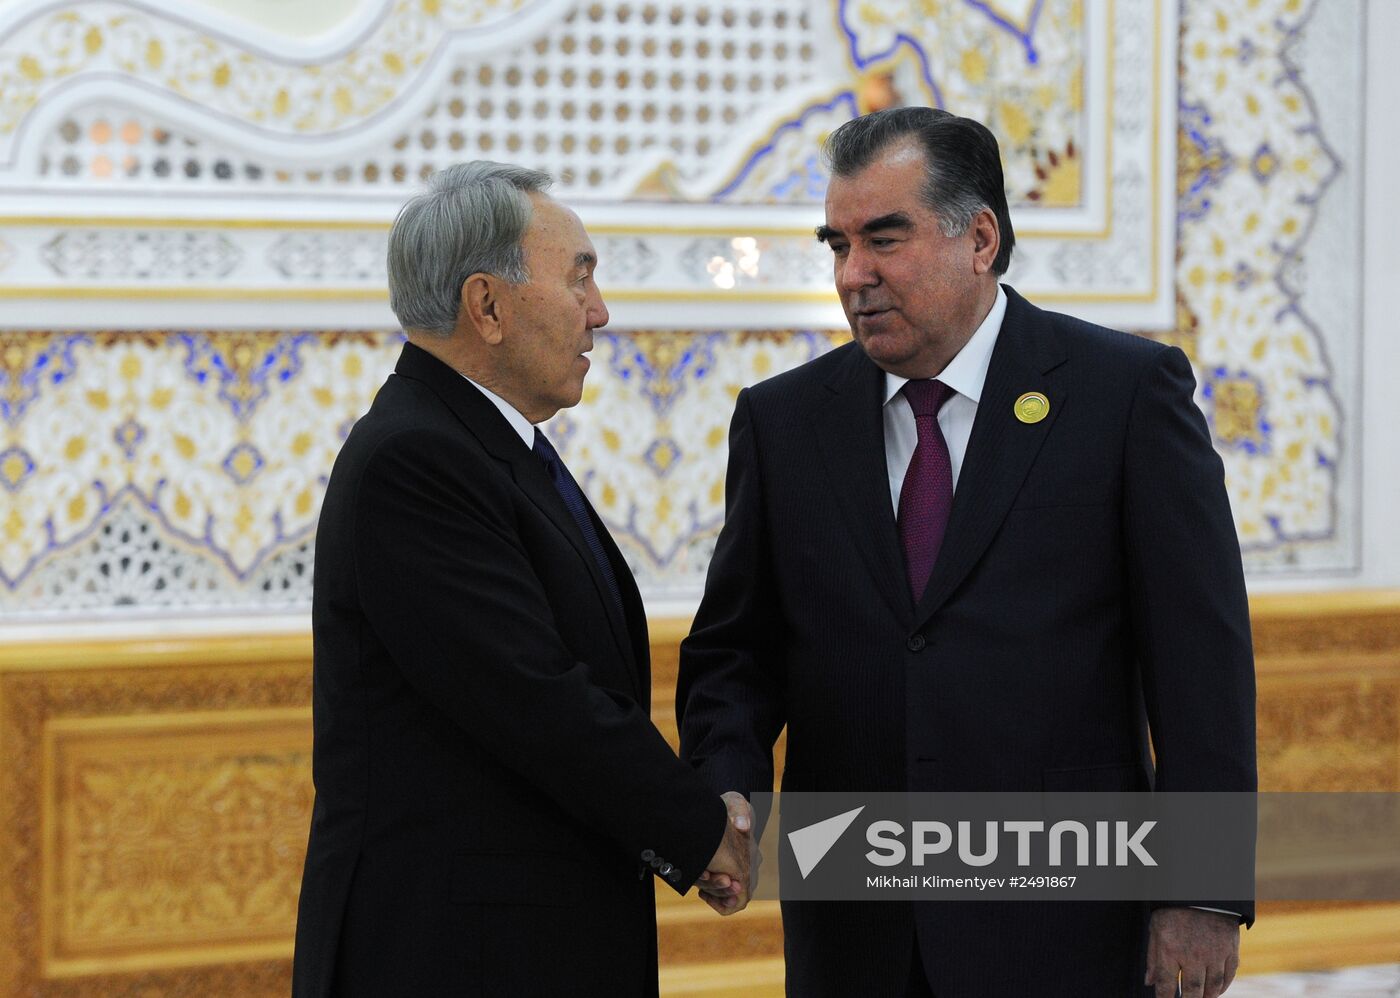 SCO summit in Dushanbe